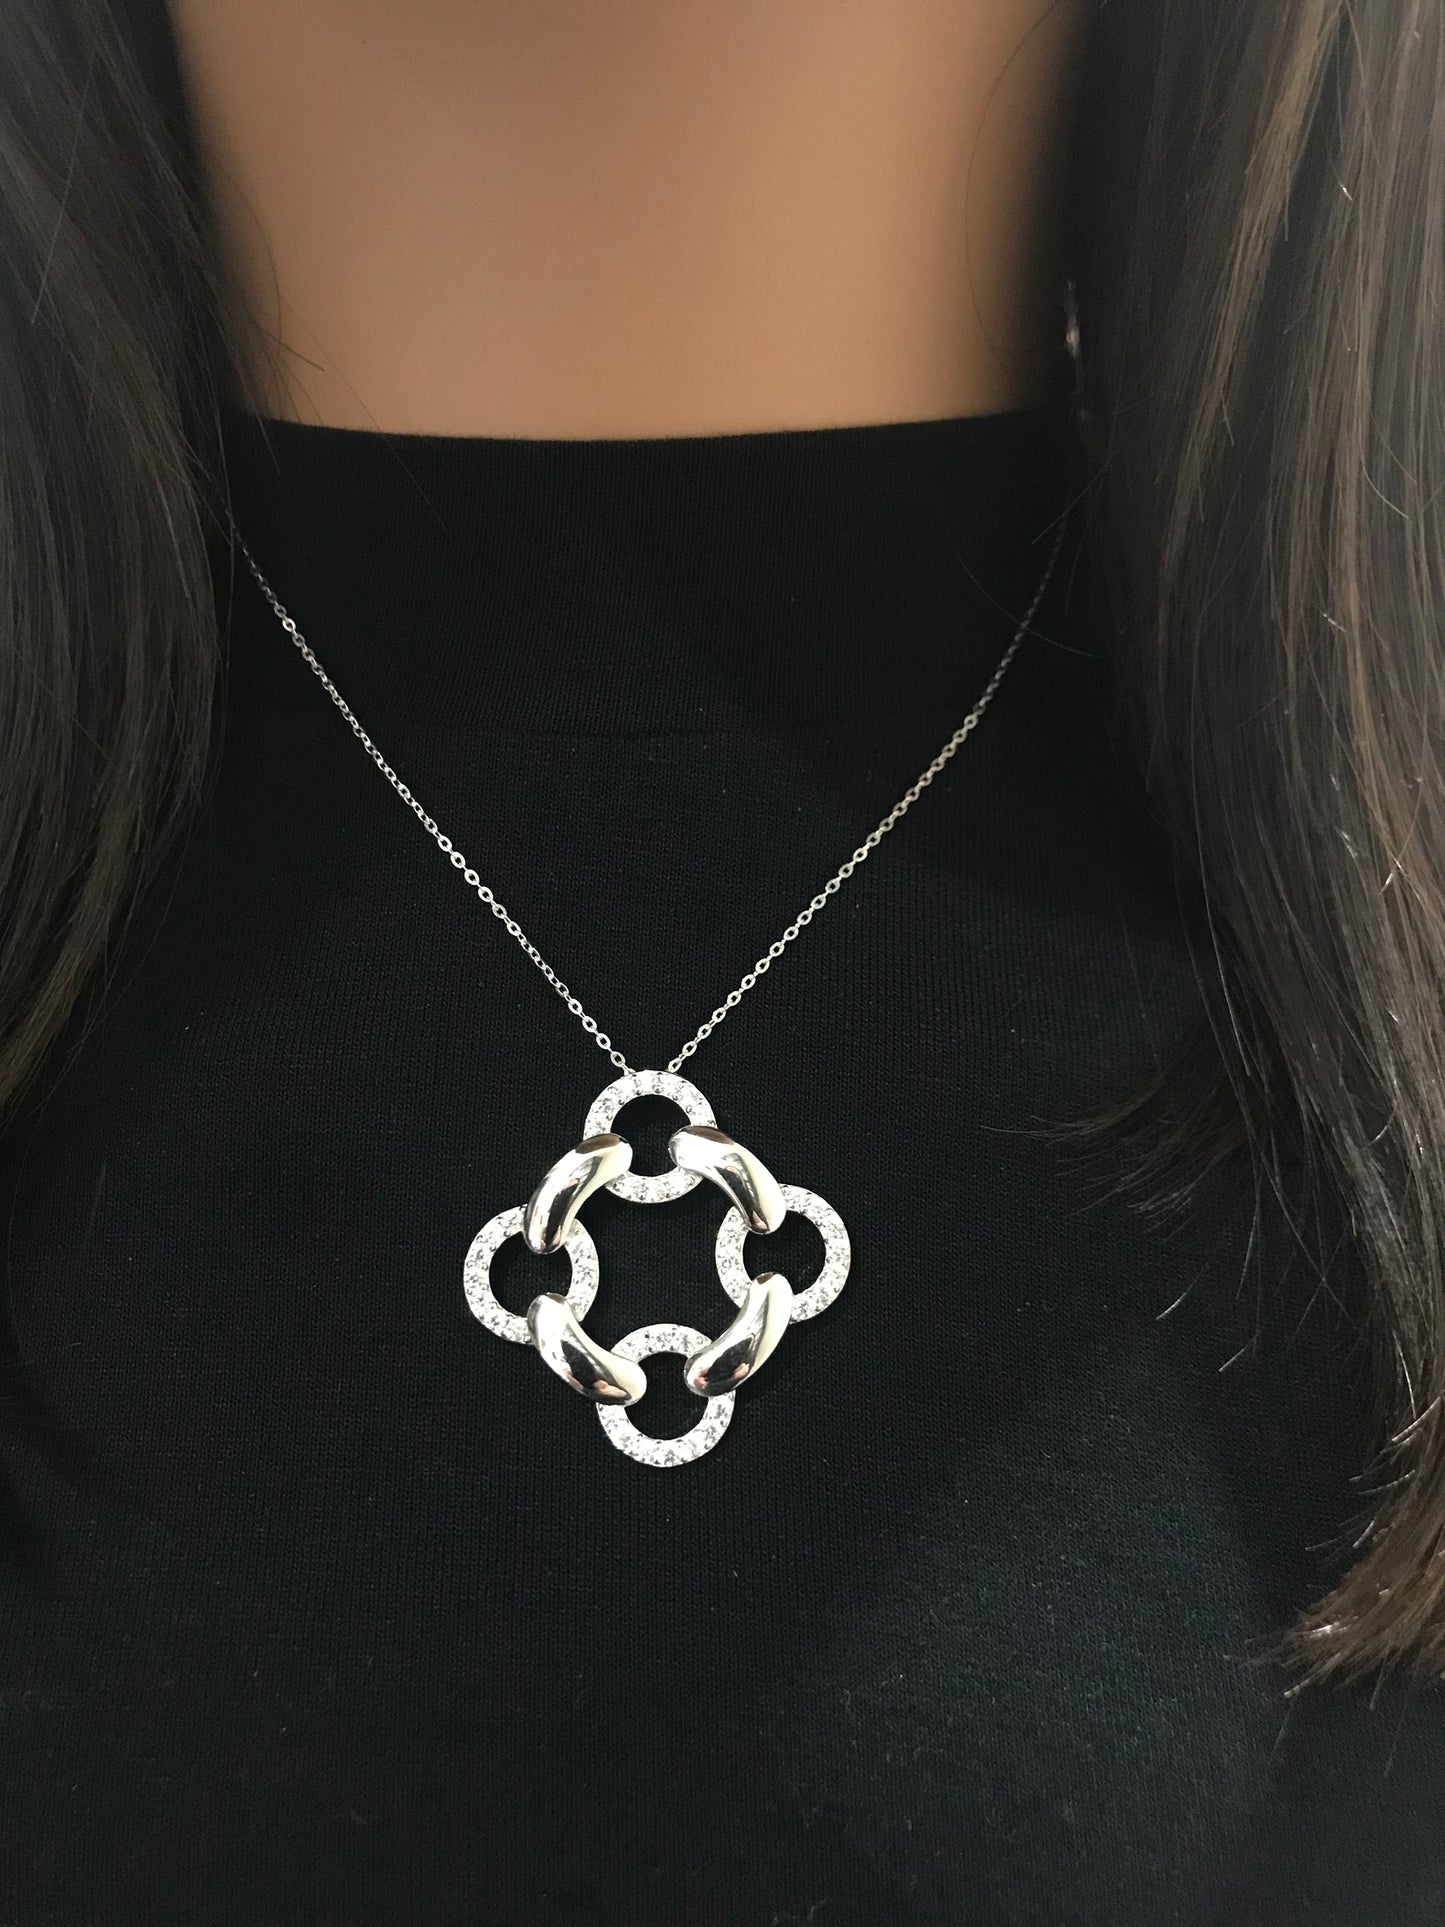 Sterling Silver Interlocking Circles CZ Pendant Necklace